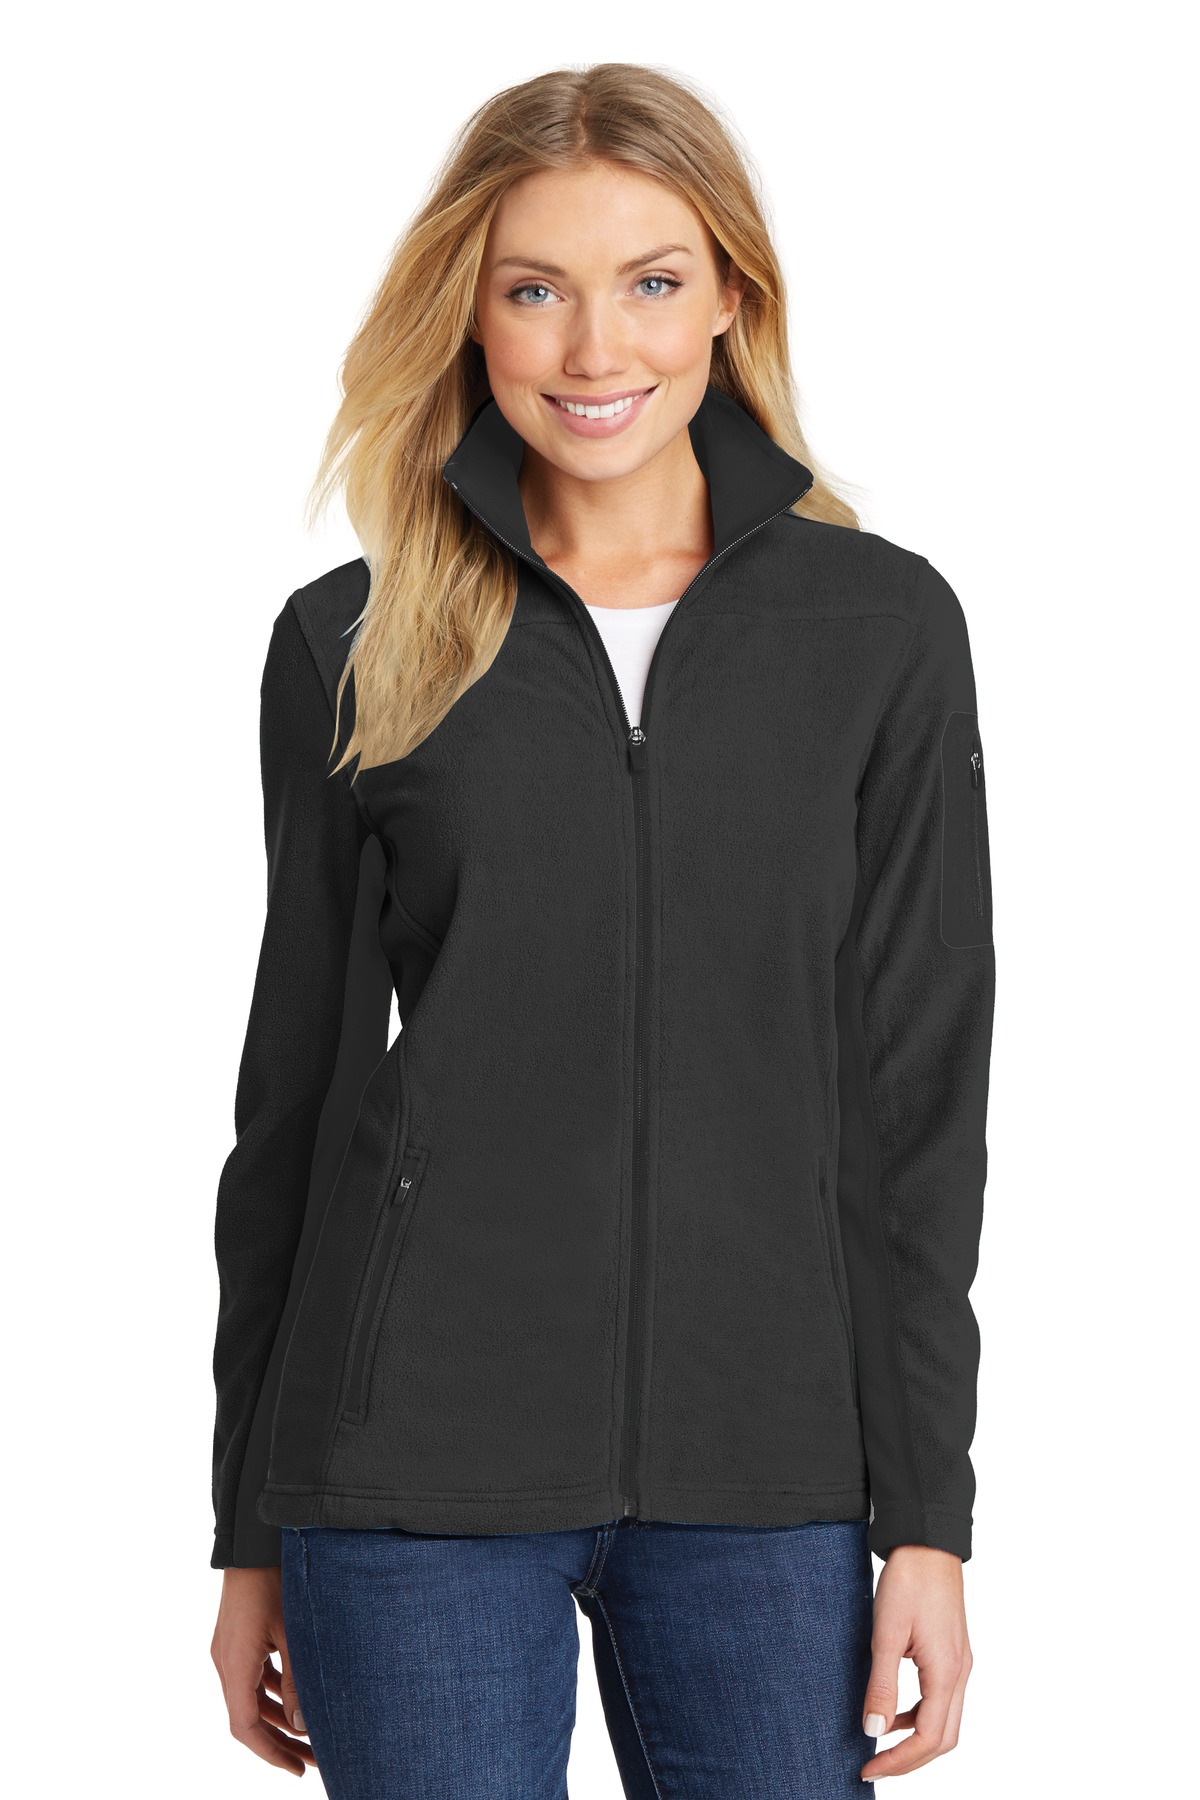 Port Authority Ladies Outerwear Sweatshirts & Fleece for Hospitality ® Ladies Summit Fleece Full-Zip Jacket.-Port Authority